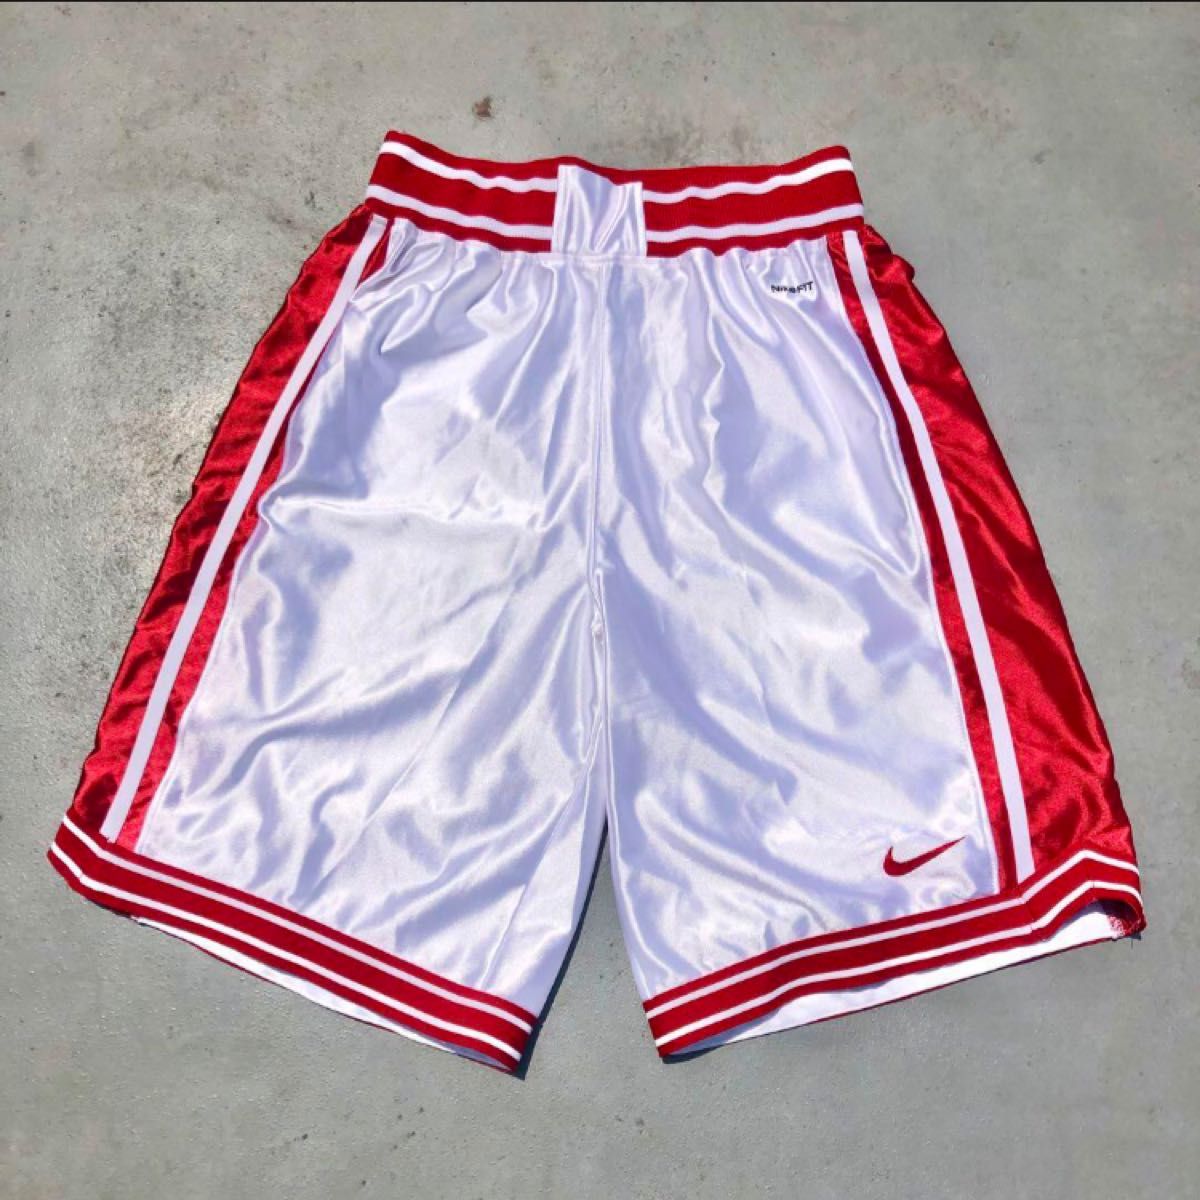 nike ナイキ バスケットボール バスパン ハーフパンツ ユニフォーム Lサイズ ホワイト レッド 白色 赤色 DRI-FIT